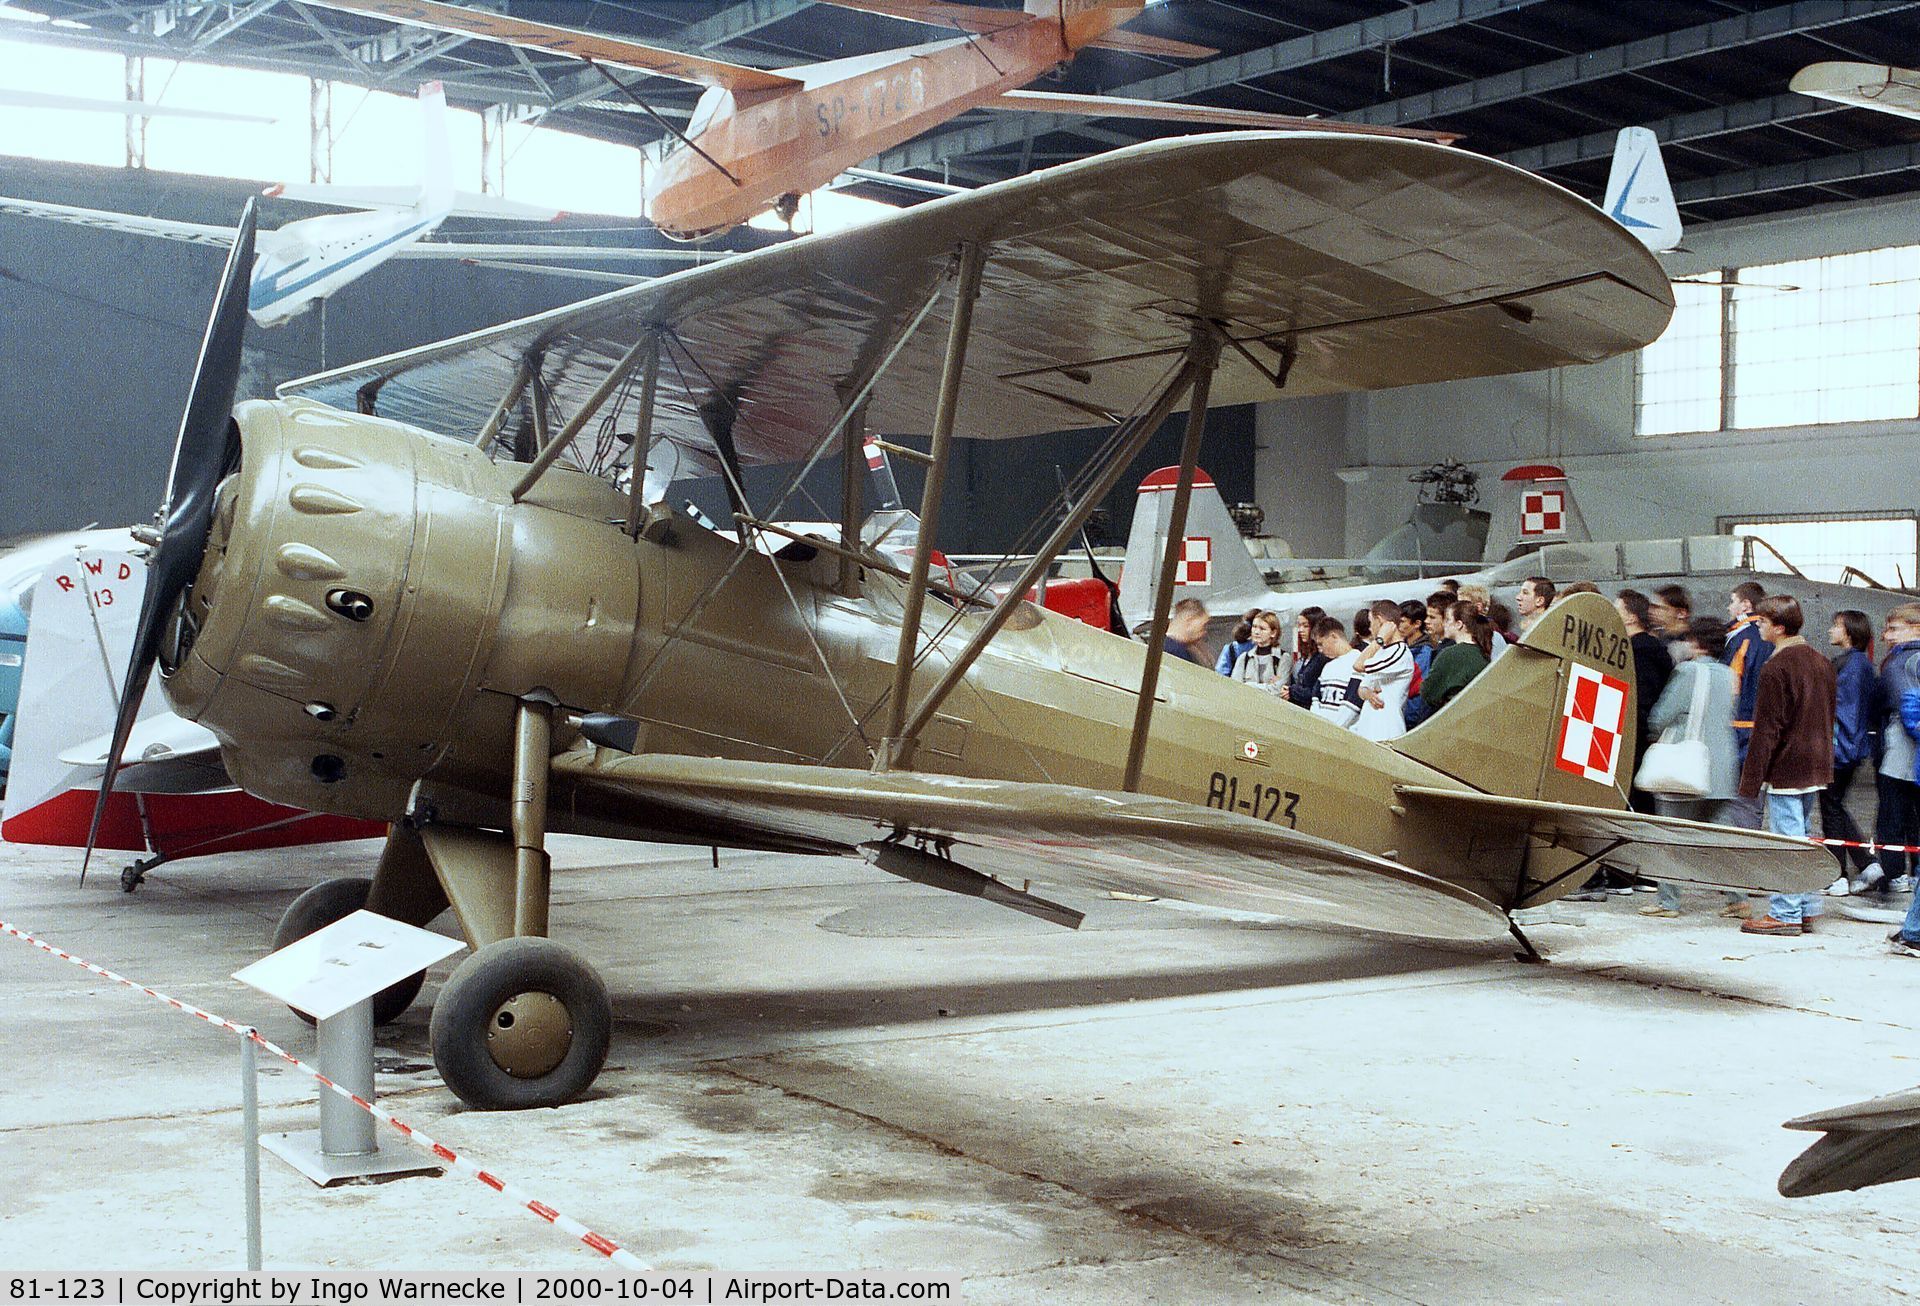 81-123, 1937 Podlanska Wytwomia Samolotow (PWS) PWS 26 C/N 81-123, PWS-26 of the polish air force at the Muzeum Lotnictwa i Astronautyki, Krakow